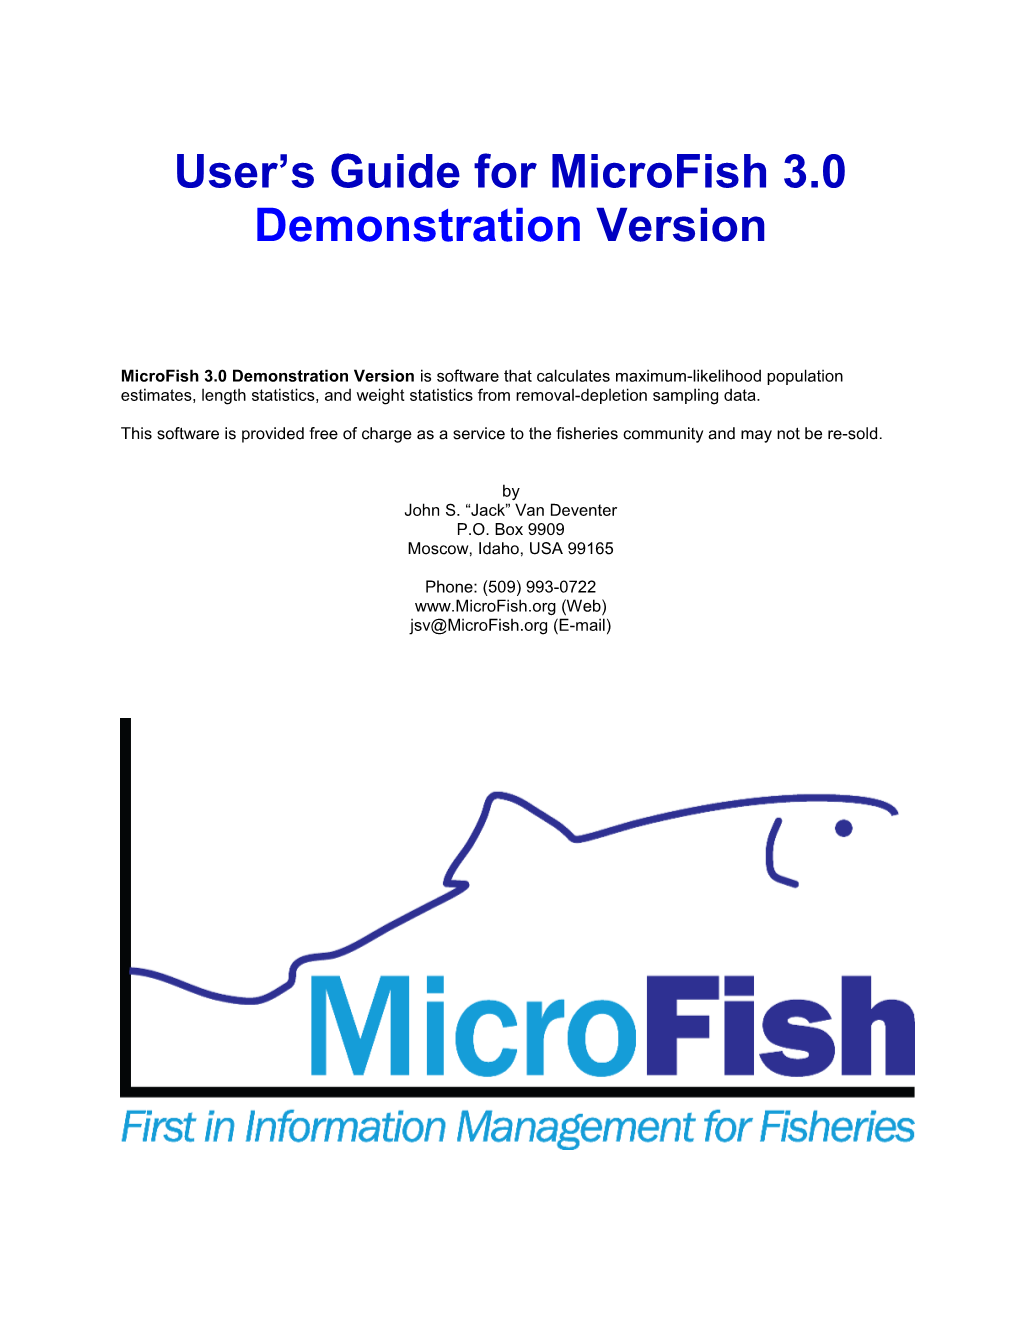 User S Guide for Microfish 3.0 Demonstration Version